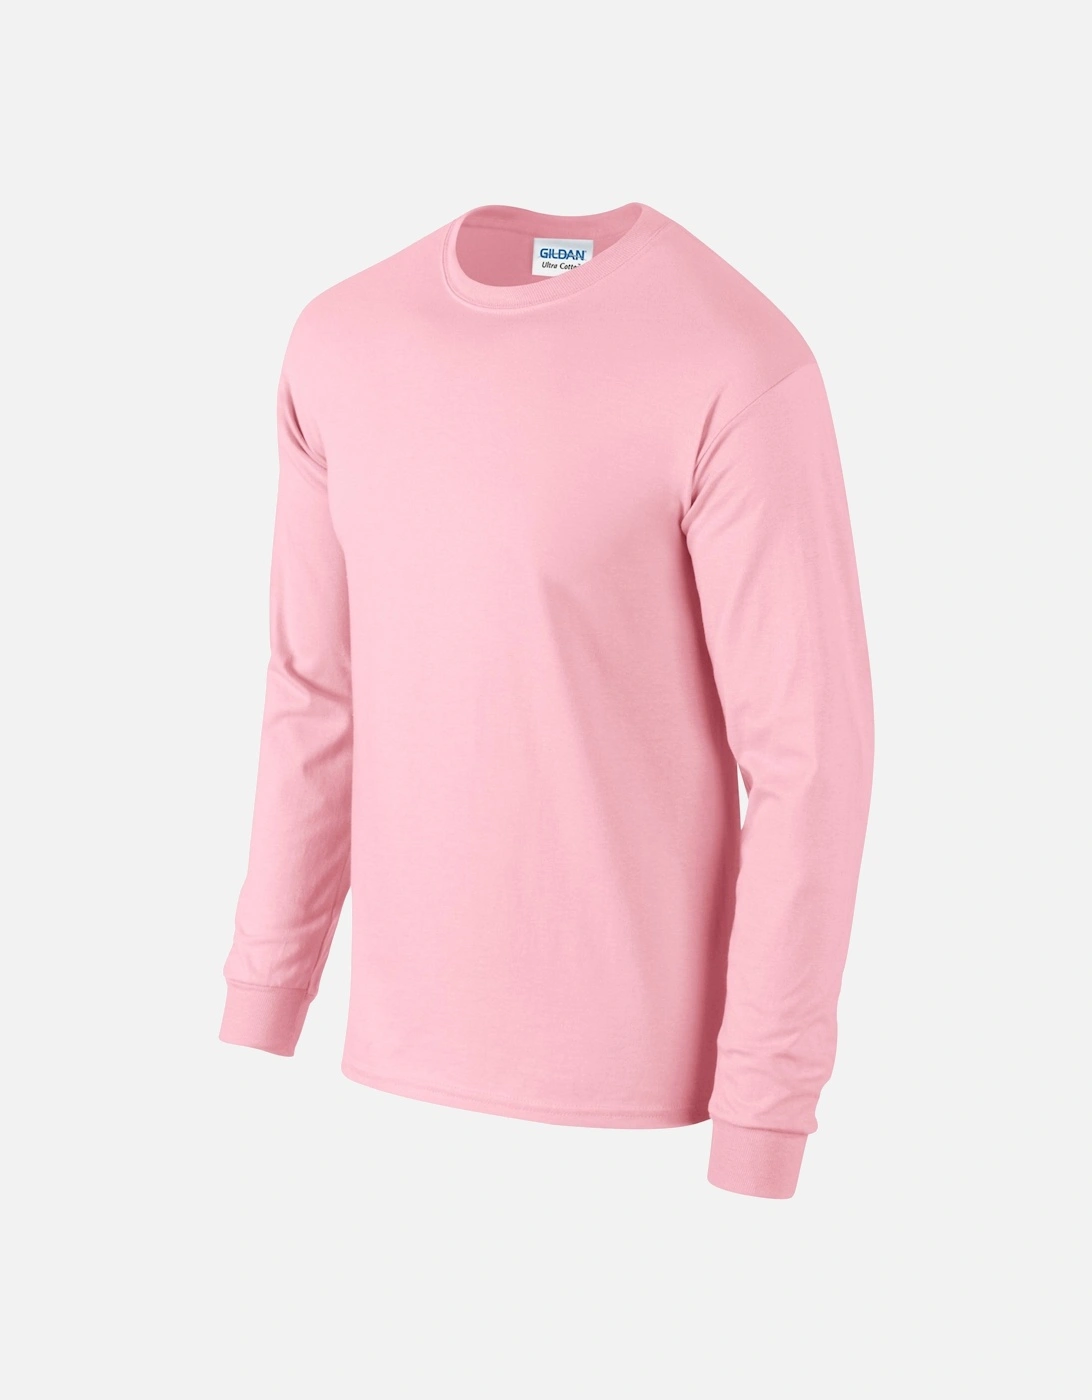 Unisex Adult Ultra Plain Cotton Long-Sleeved T-Shirt